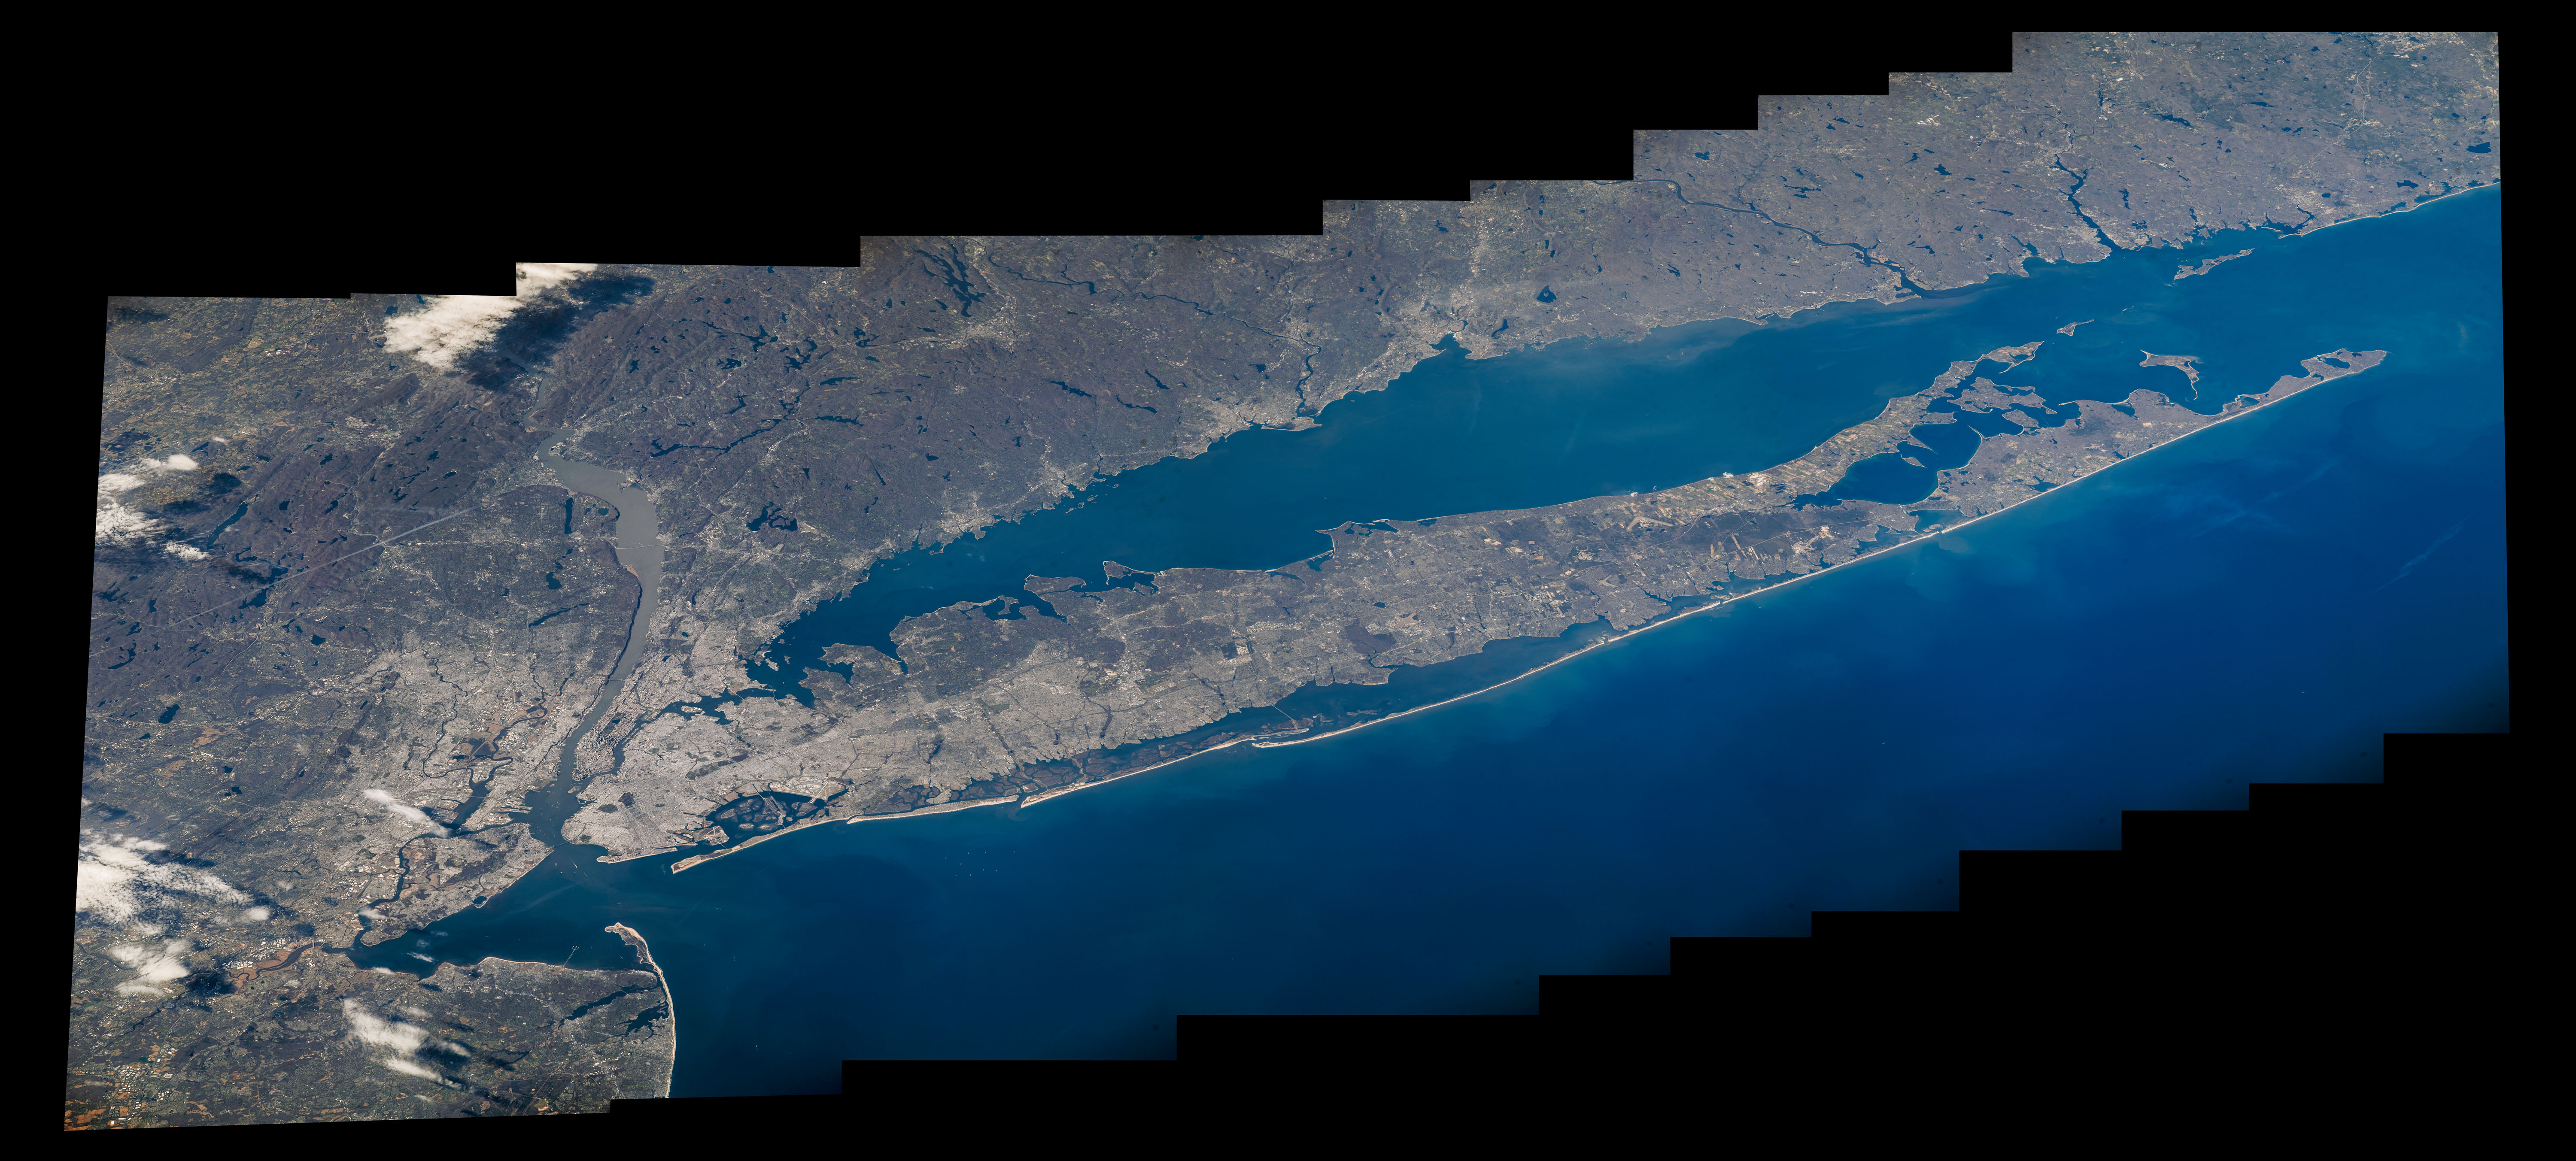 New York City and Long Island